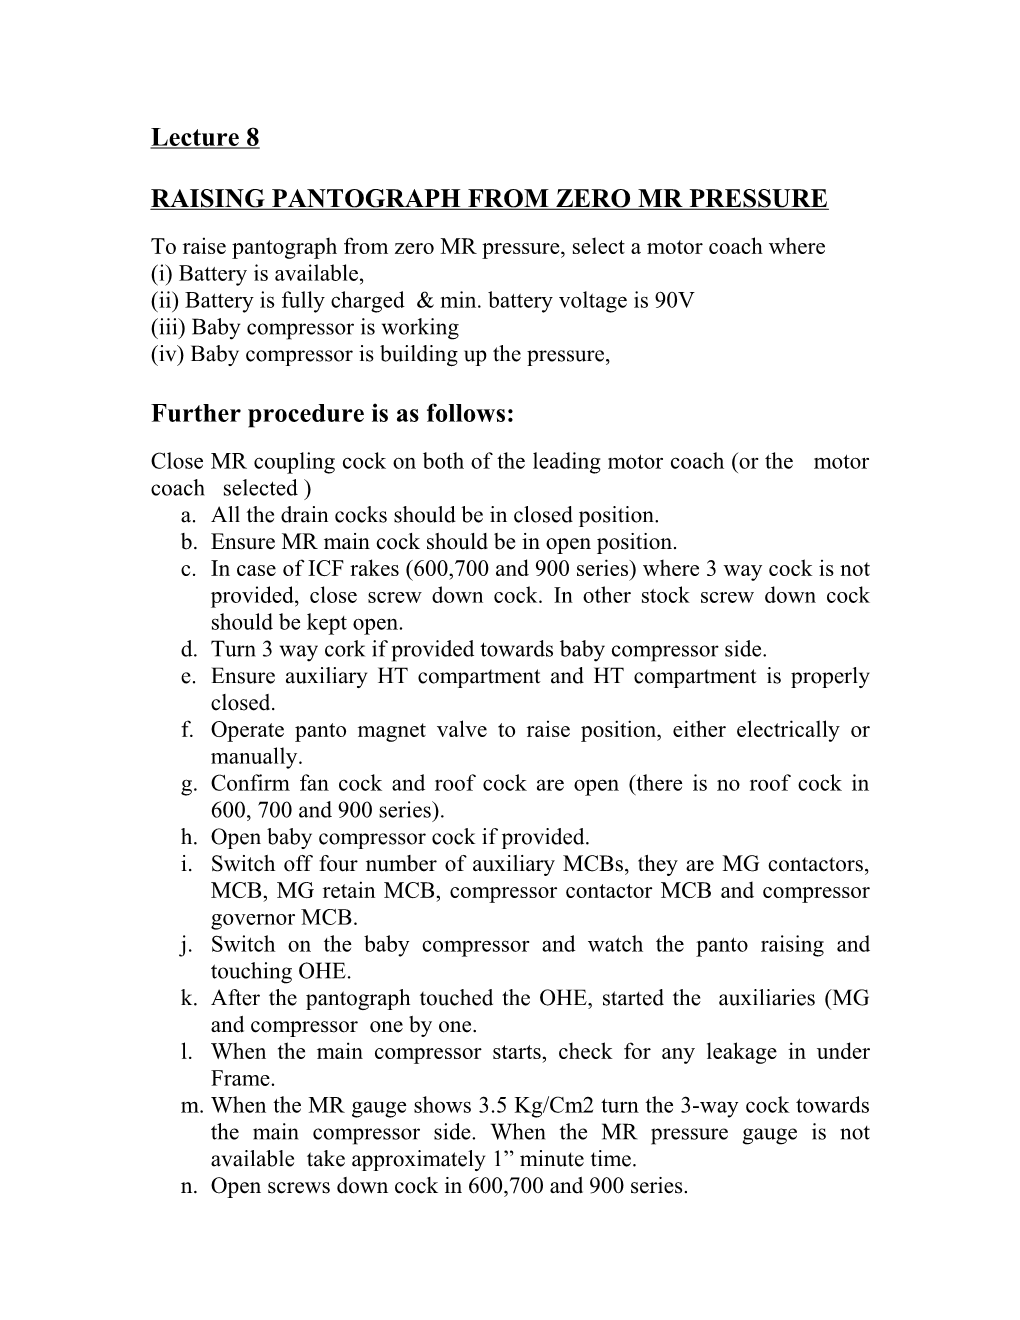 Raising Pantograph from Zero Mr Pressure